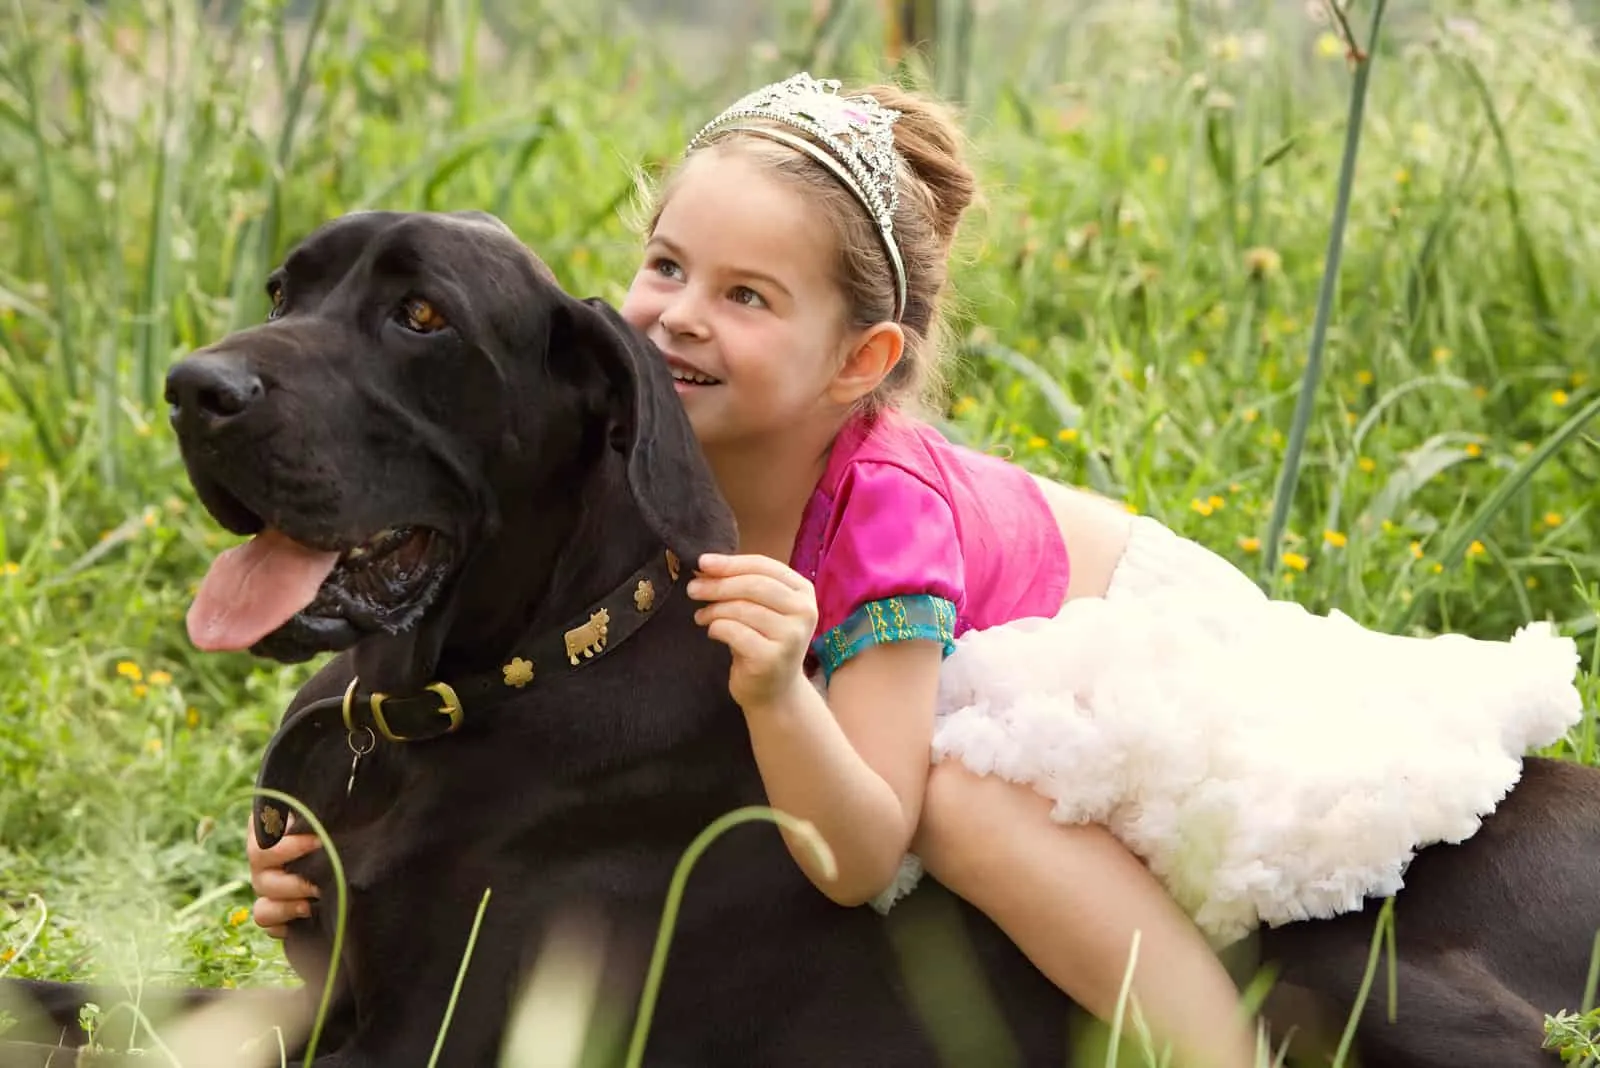 beautiful young girl wearing a fancy dress, sitting on her dog pet back